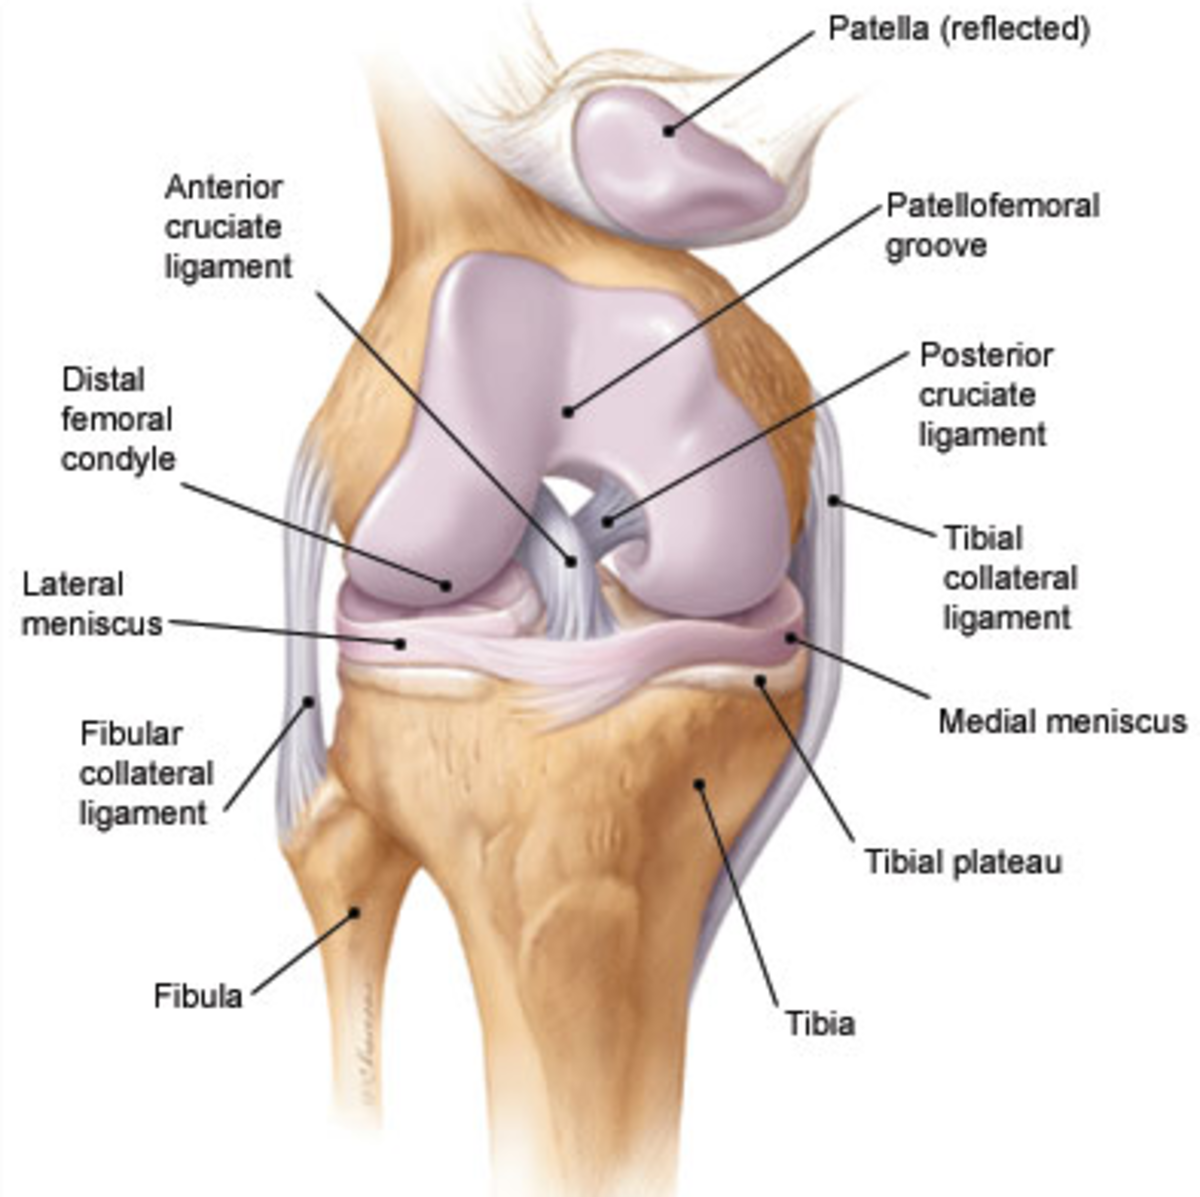 Anatomy of the knee (Bones Muscles Arteries Veins Nerves)